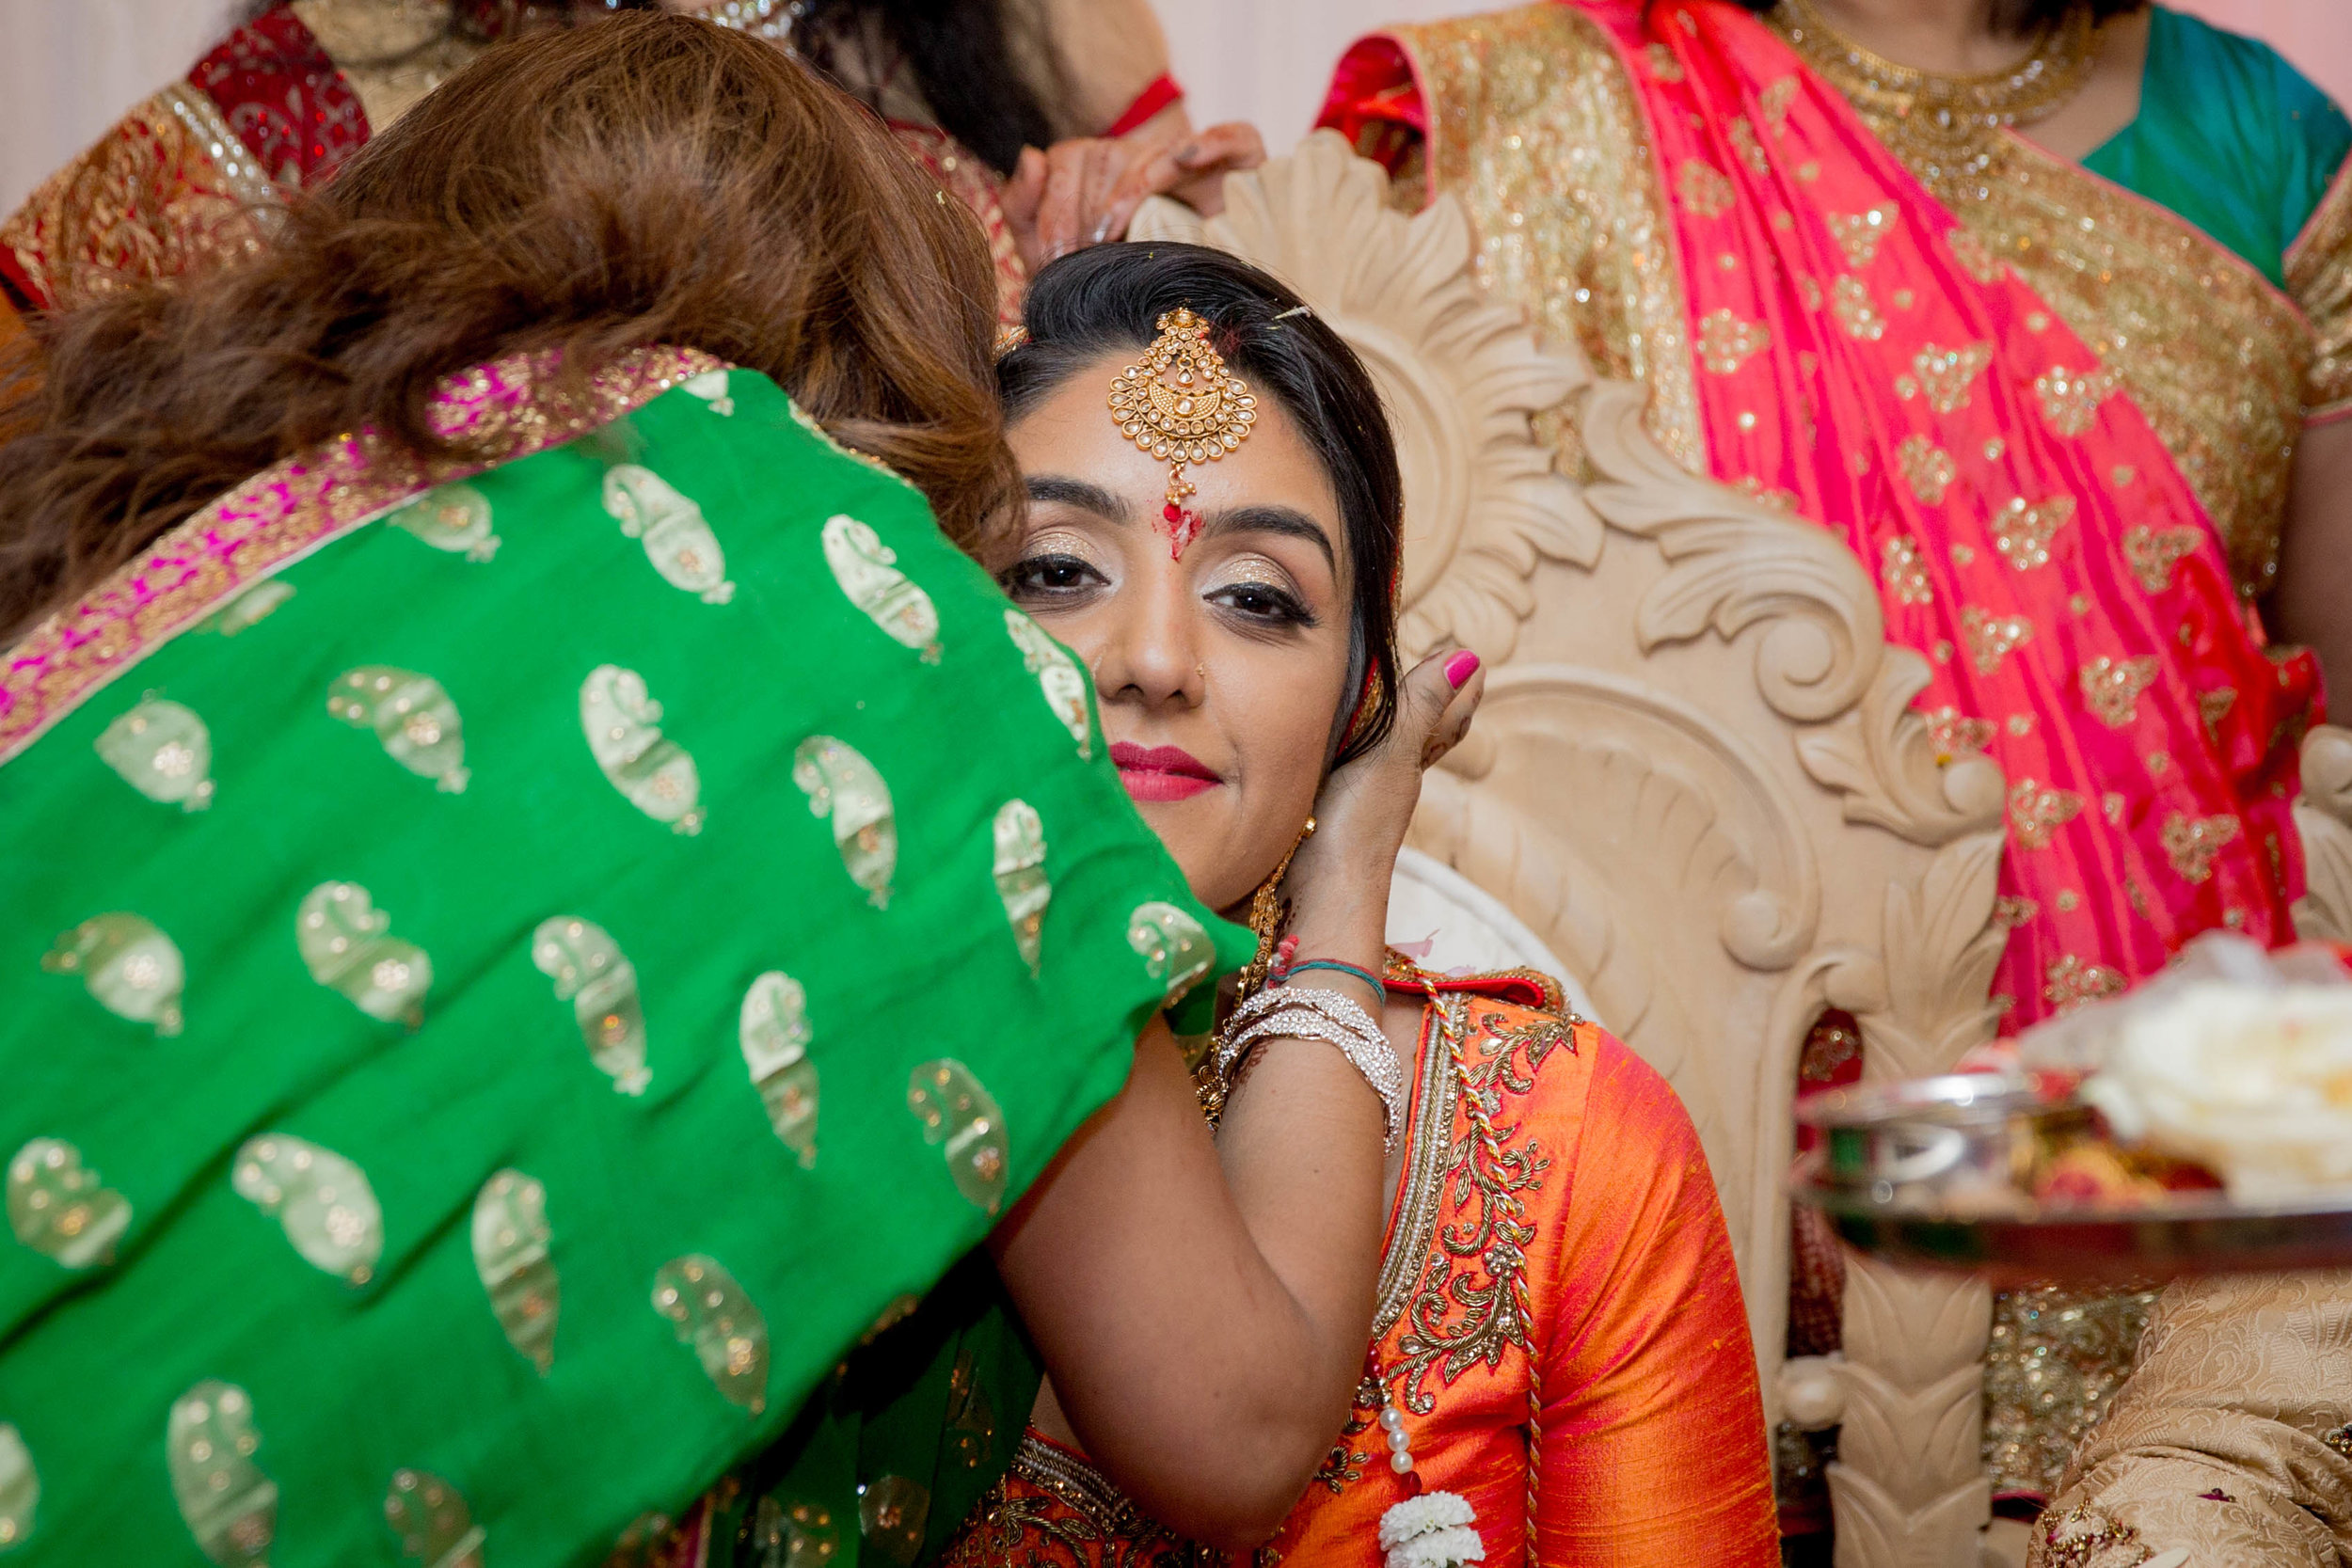 premier-banquetting-london-Hindu-asian-wedding-photographer-natalia-smith-photography-30.jpg